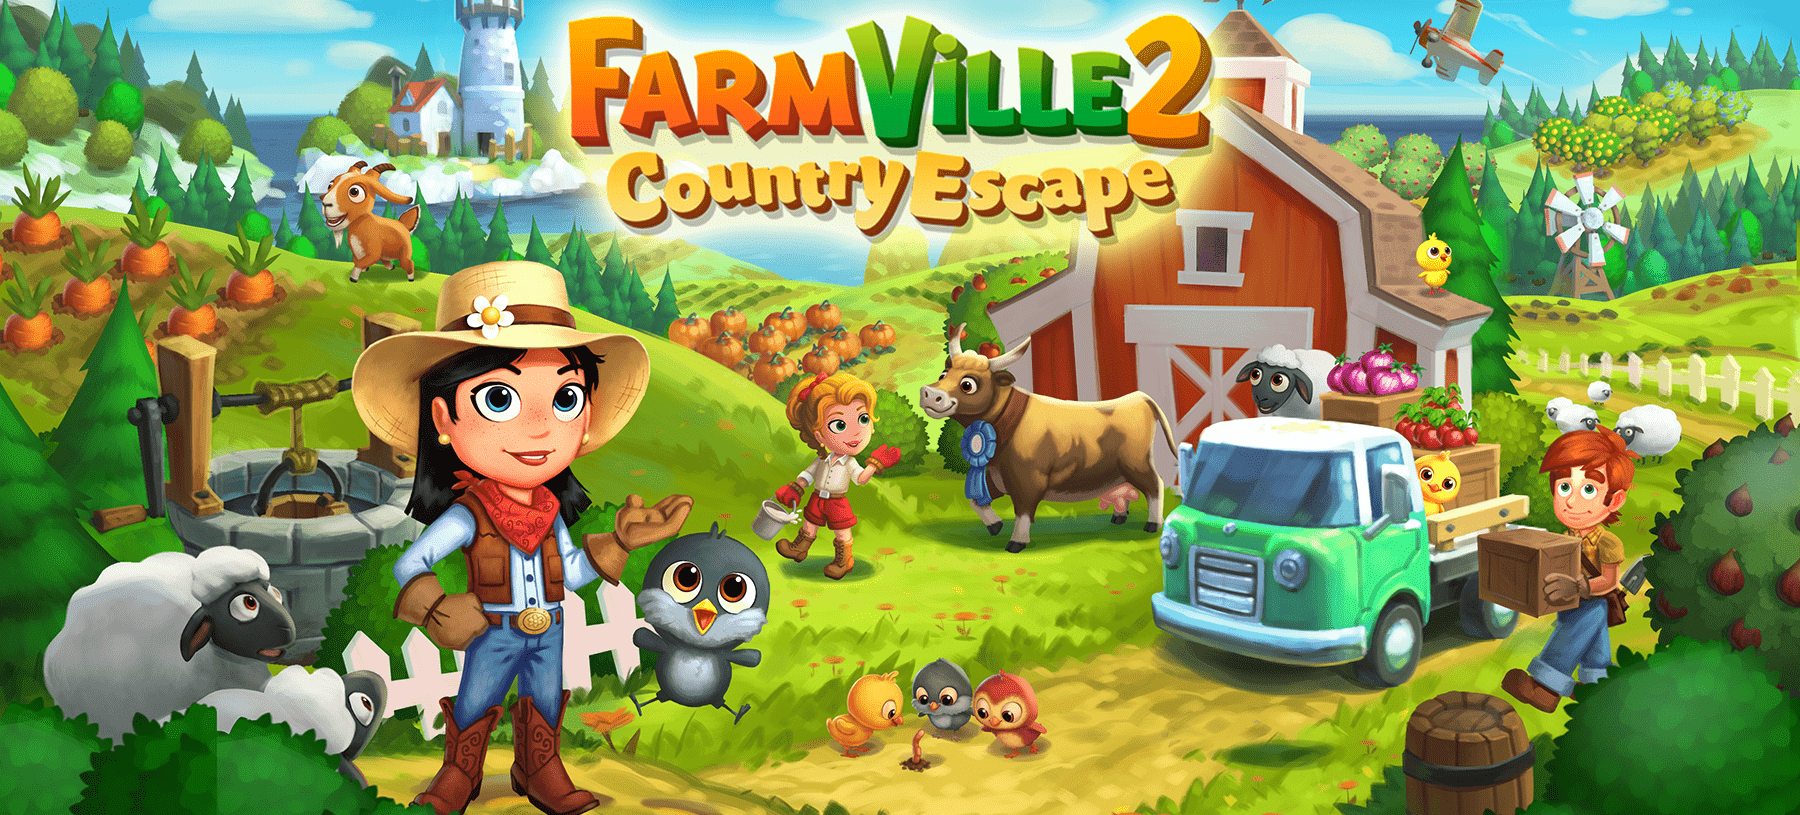 farmville 2 download for pc windows 10